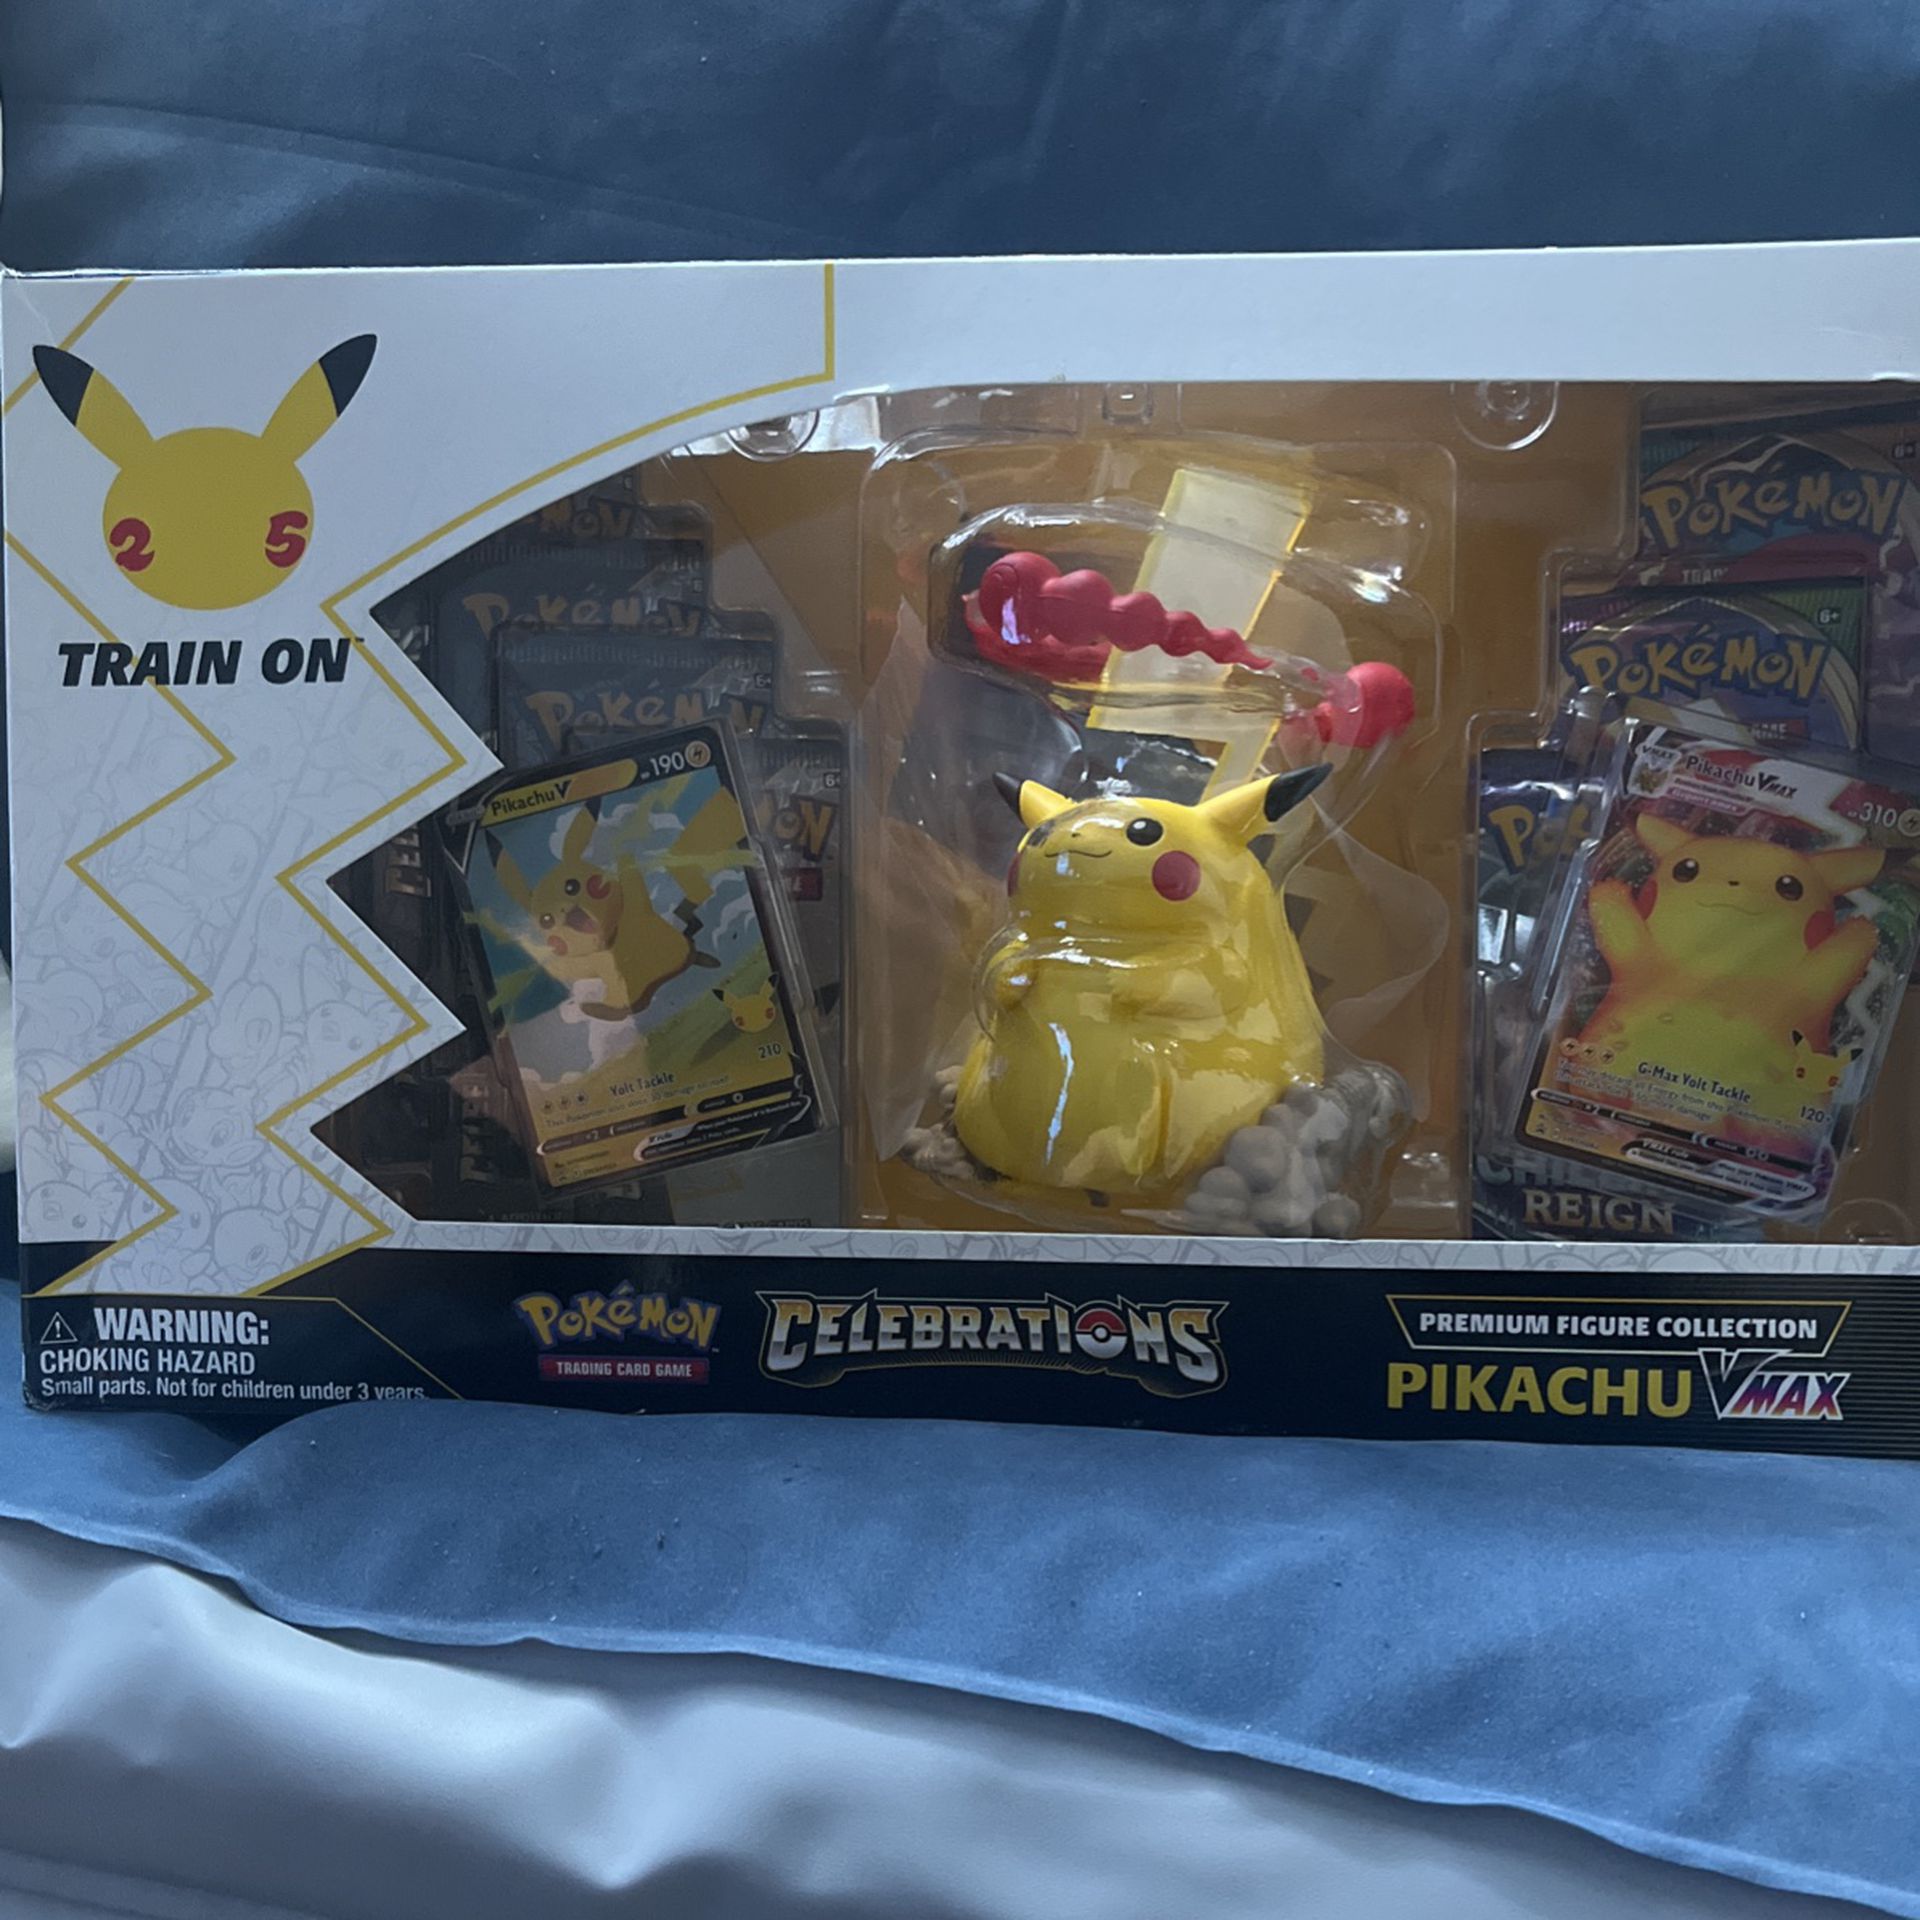 Pikachu Vmax Premium Figure Collection